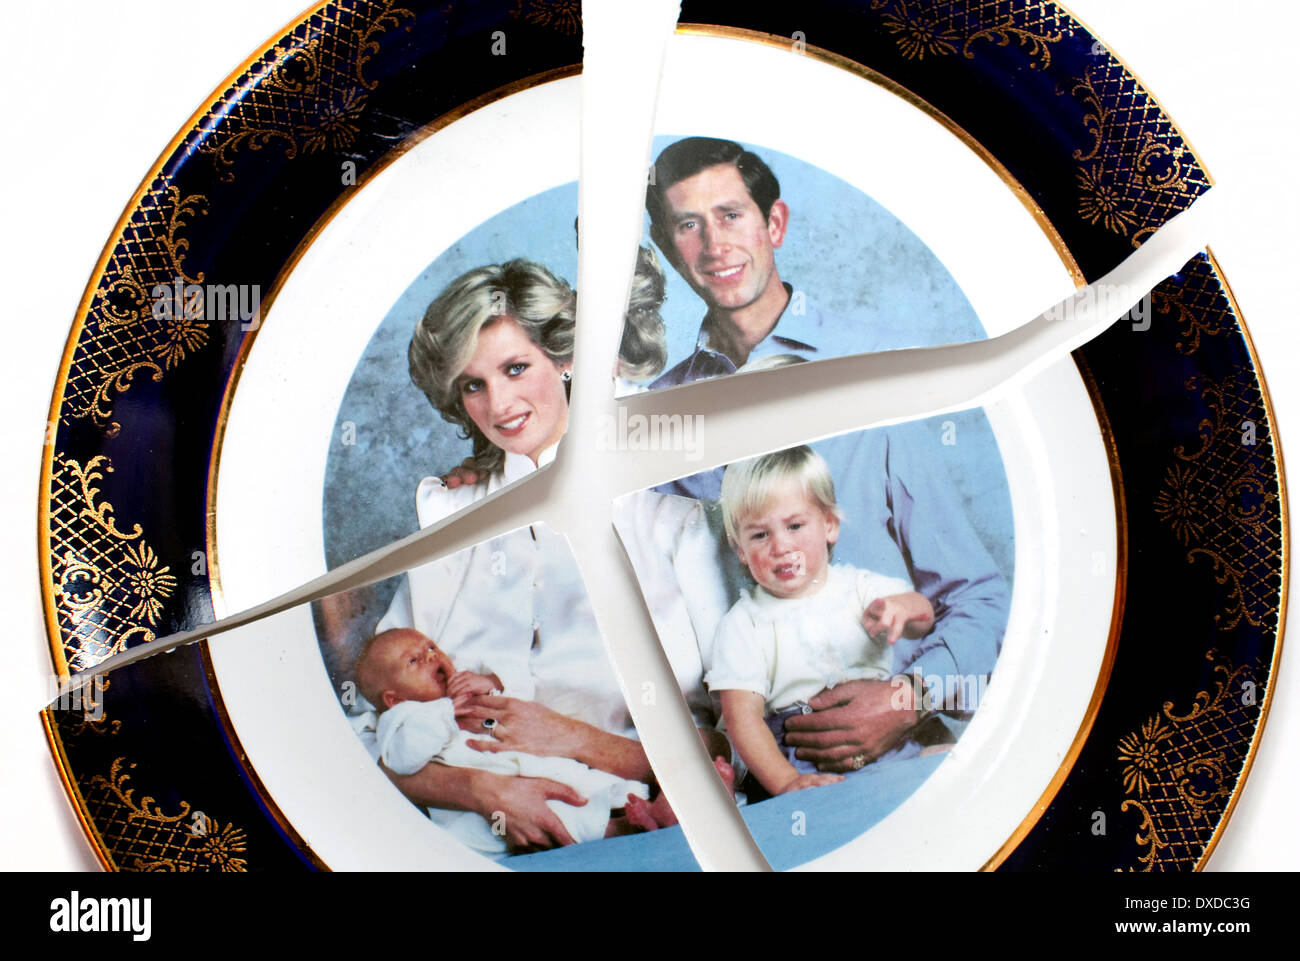 Broken family: Prince Charles & Princess of Wales & children Stock Photo